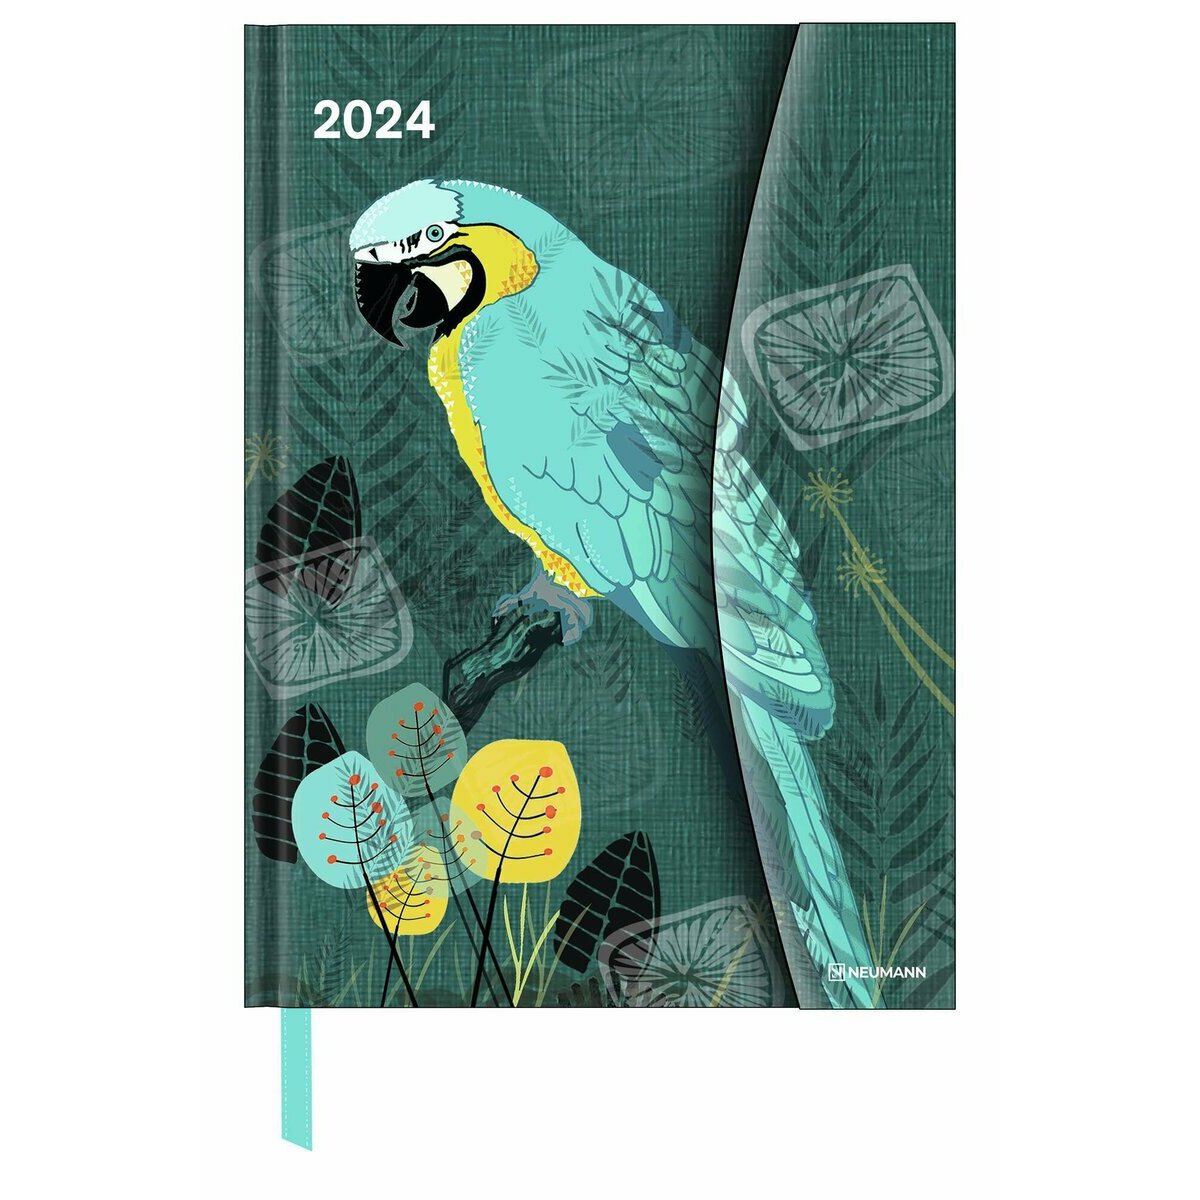 Oiseaux : agenda 2024